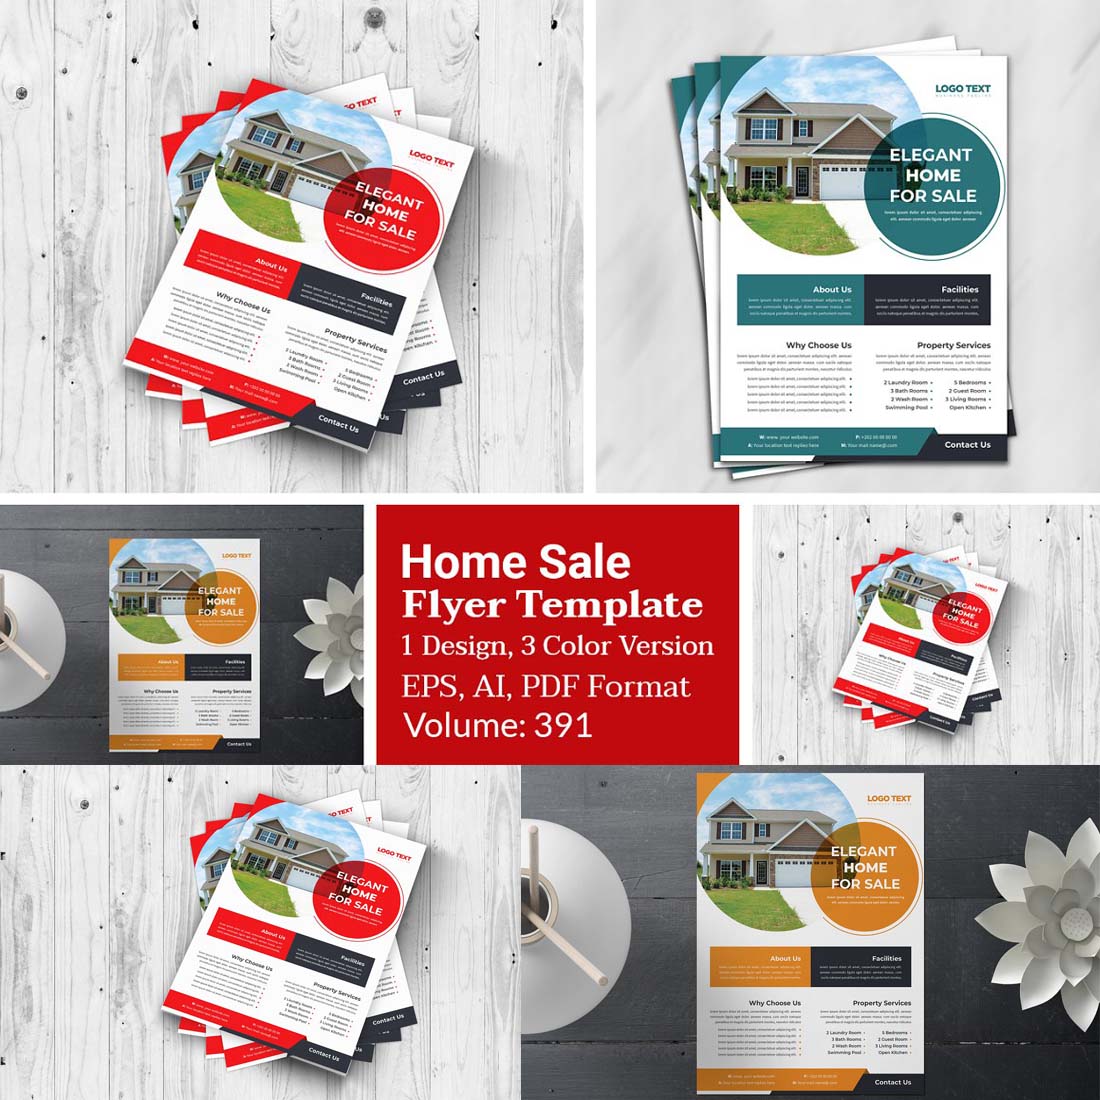 Home Real Estate Flyer Design cover image.